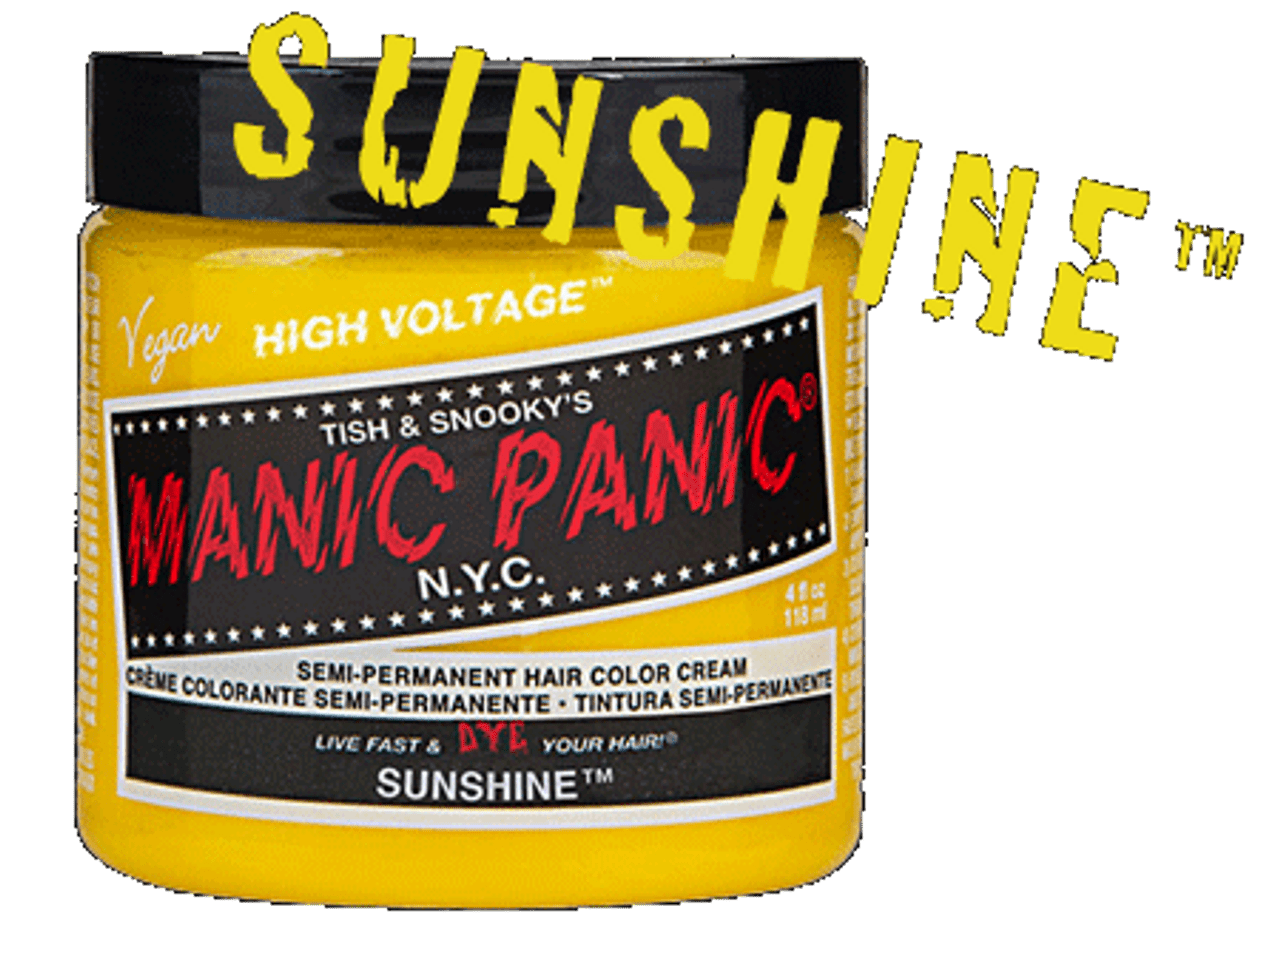 Manic Panic Semi-Permanent Hair Color Cream - wide 1